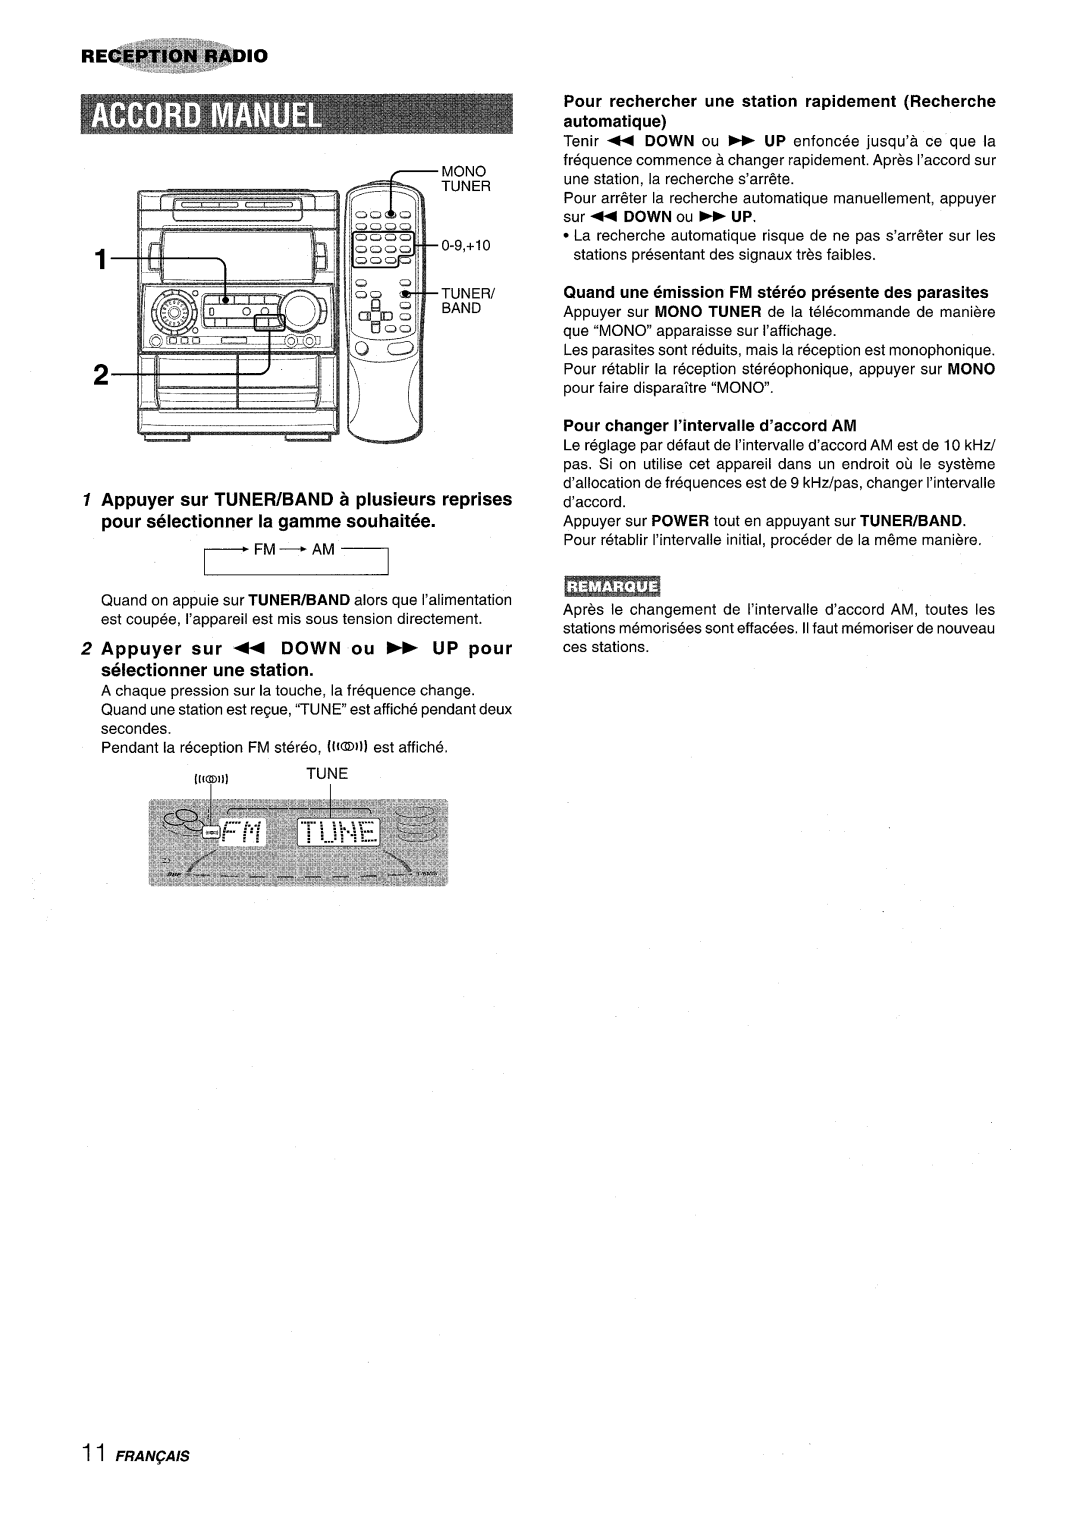 Aiwa NSX-A909 manual Quand une emission FM stereo presente des parasites, FRAfVQA/S 